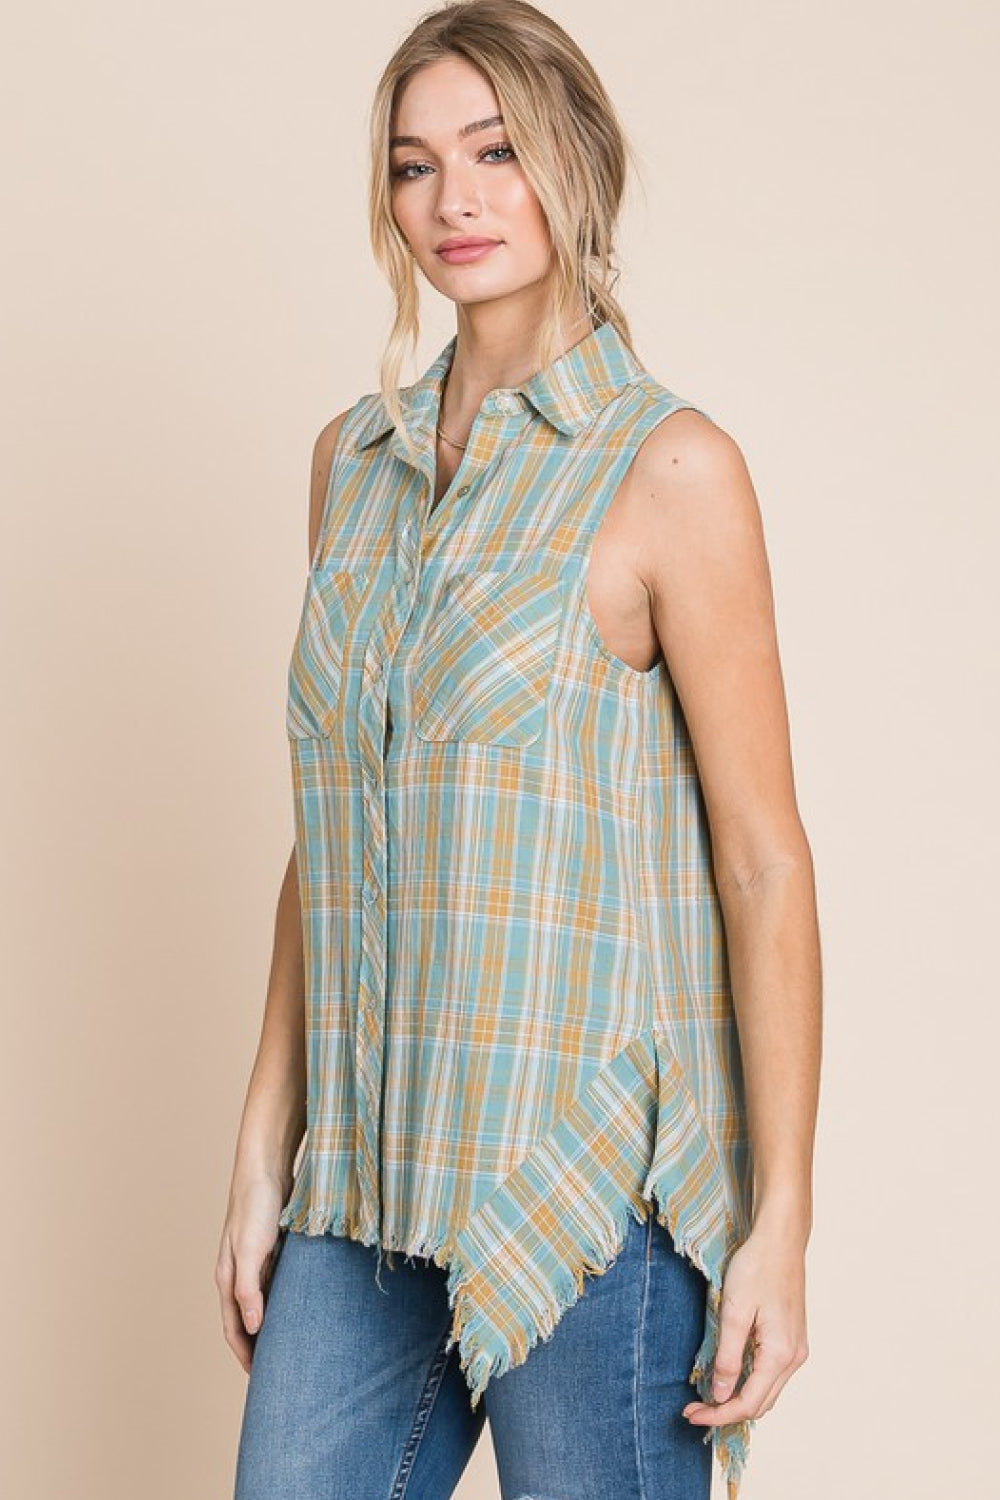 HEYSON Days Gone By Full Size Sleeveless Frayed Plaid Button-Up Shirt